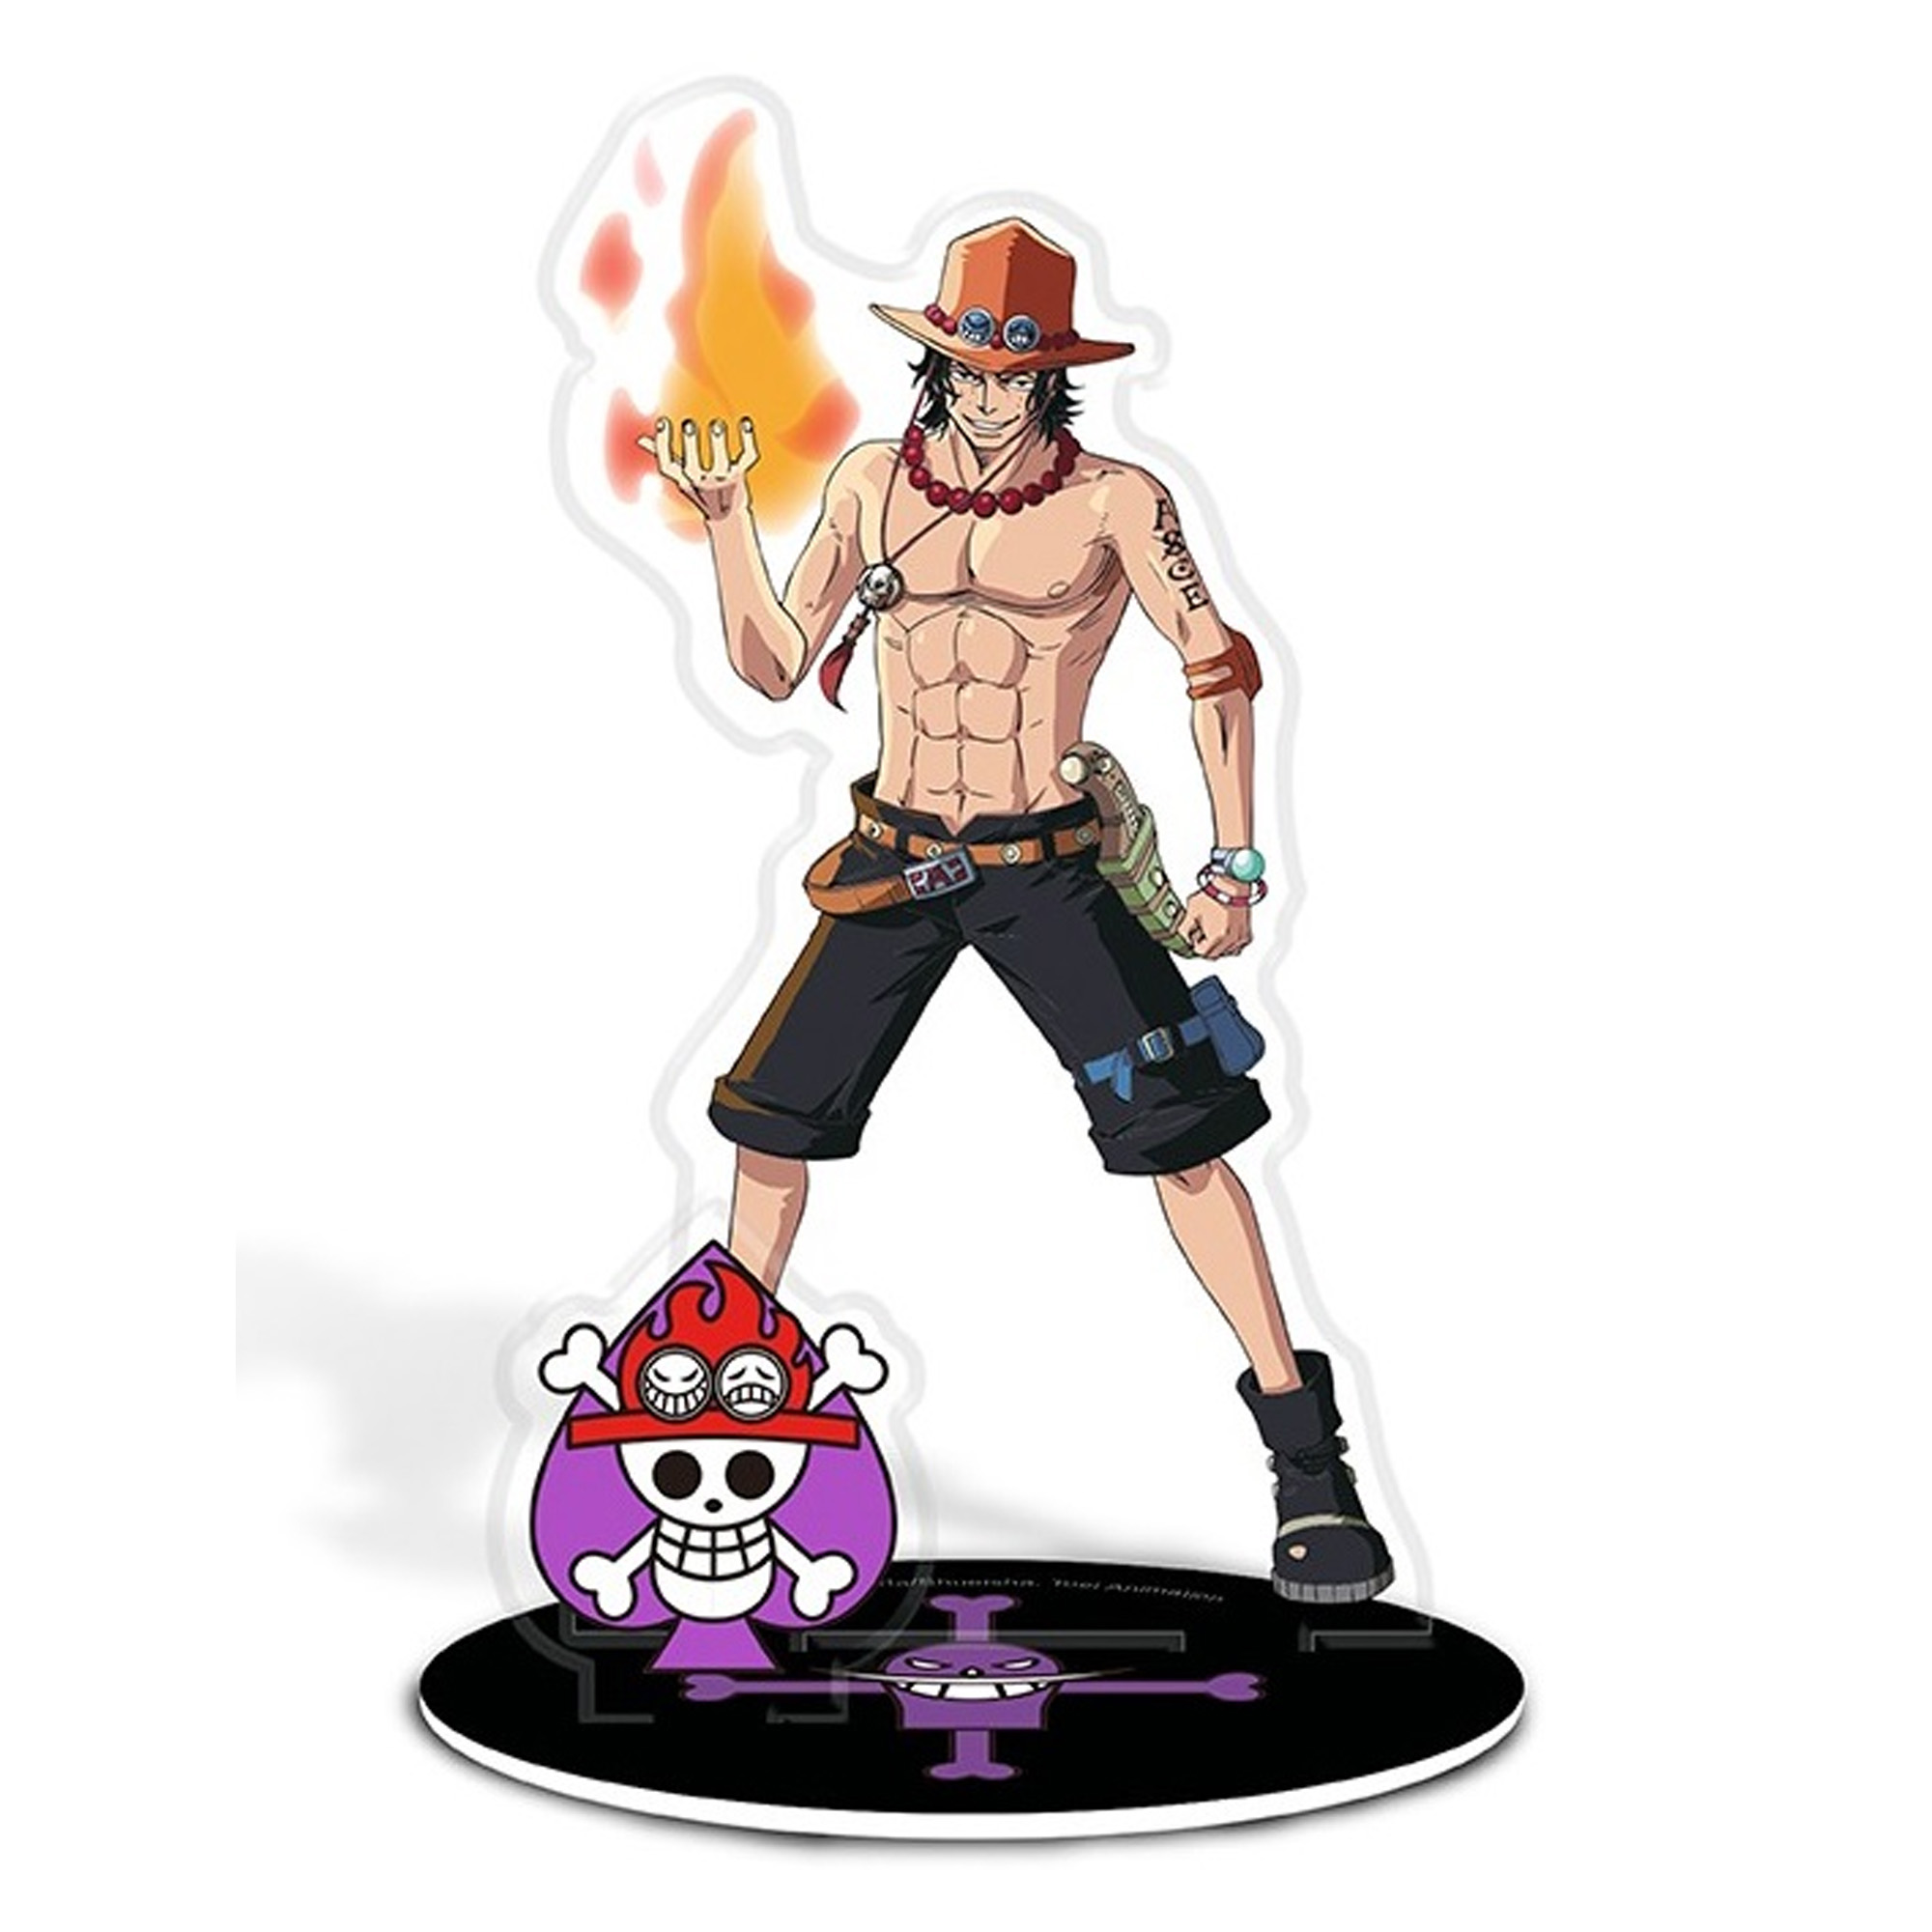 Portgas D. Ace Acryl Figur - One Piece